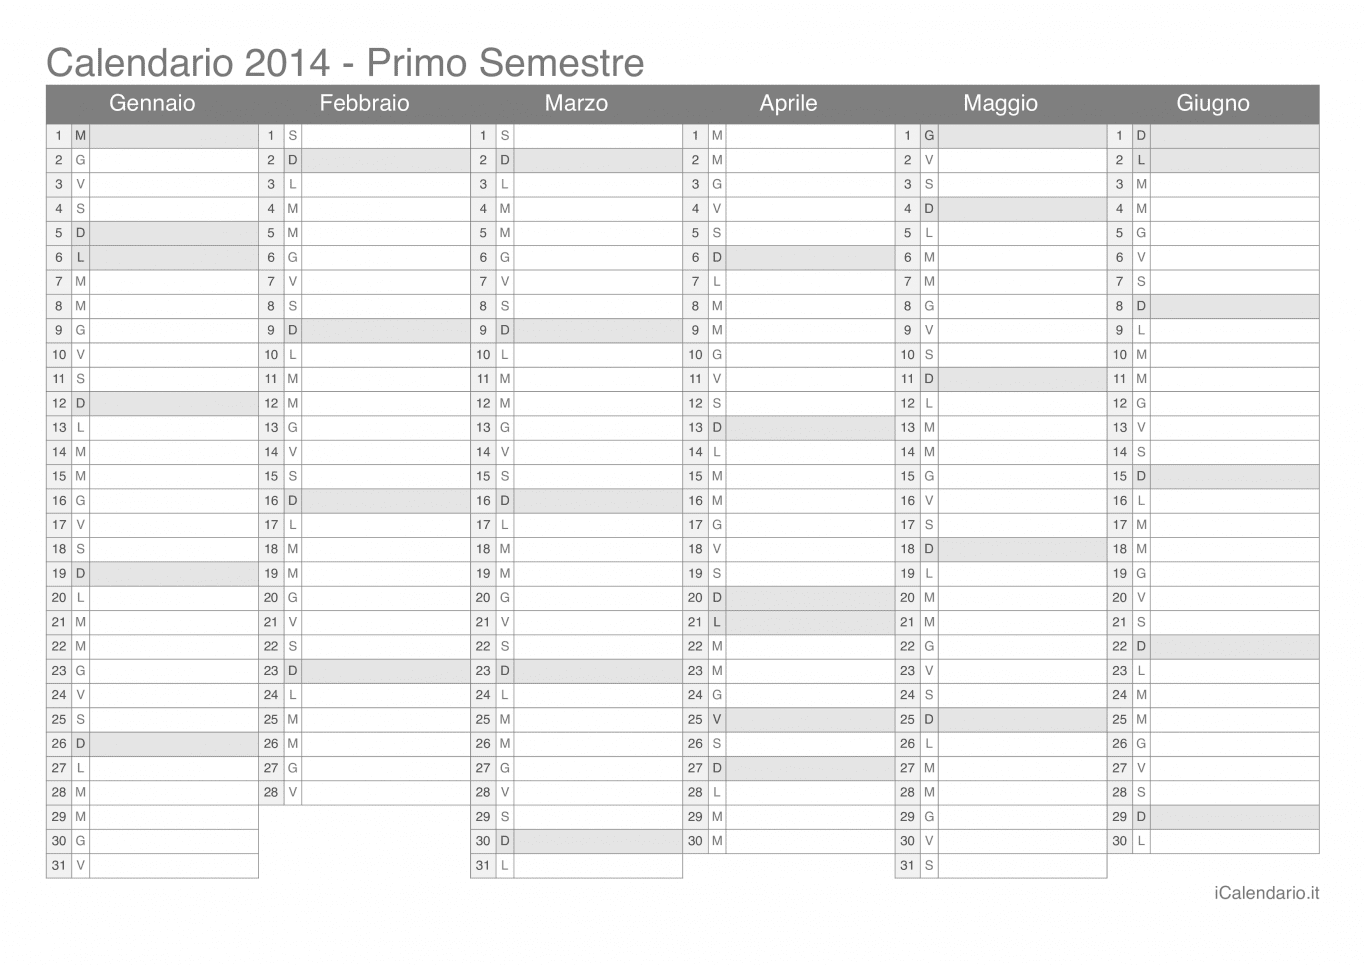 Calendario semestrale 2014